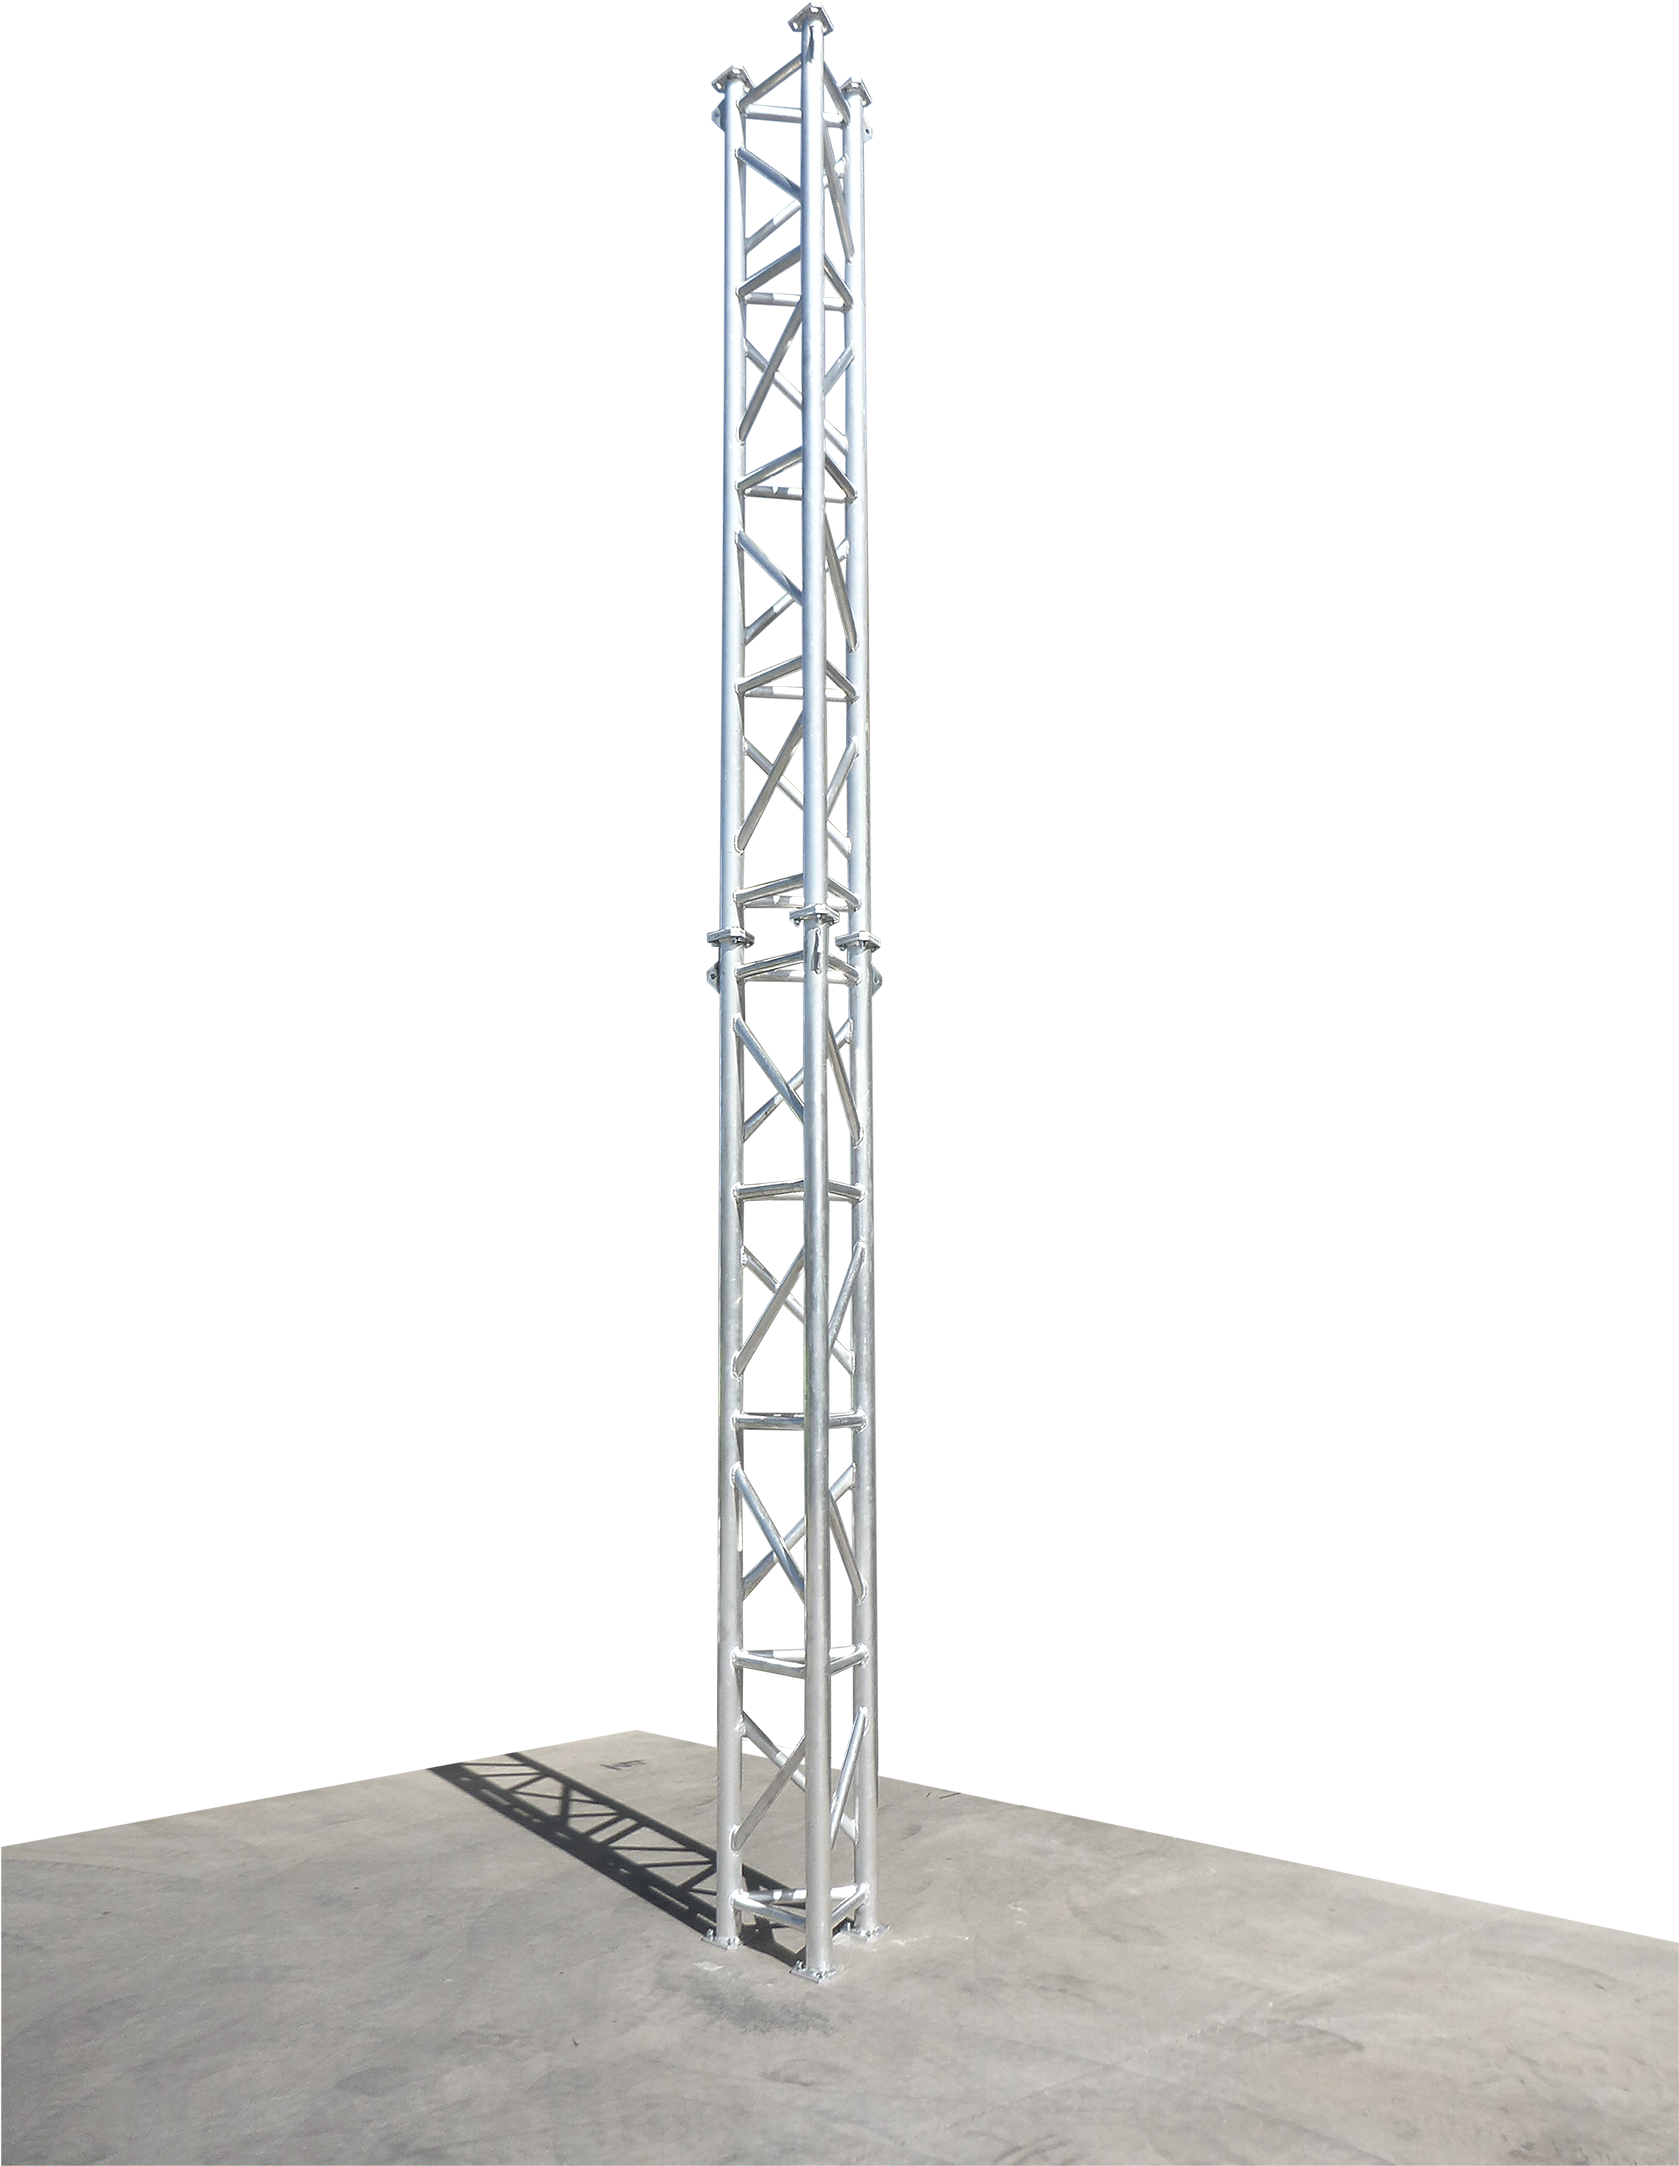 Metal Lattice Tower Structure